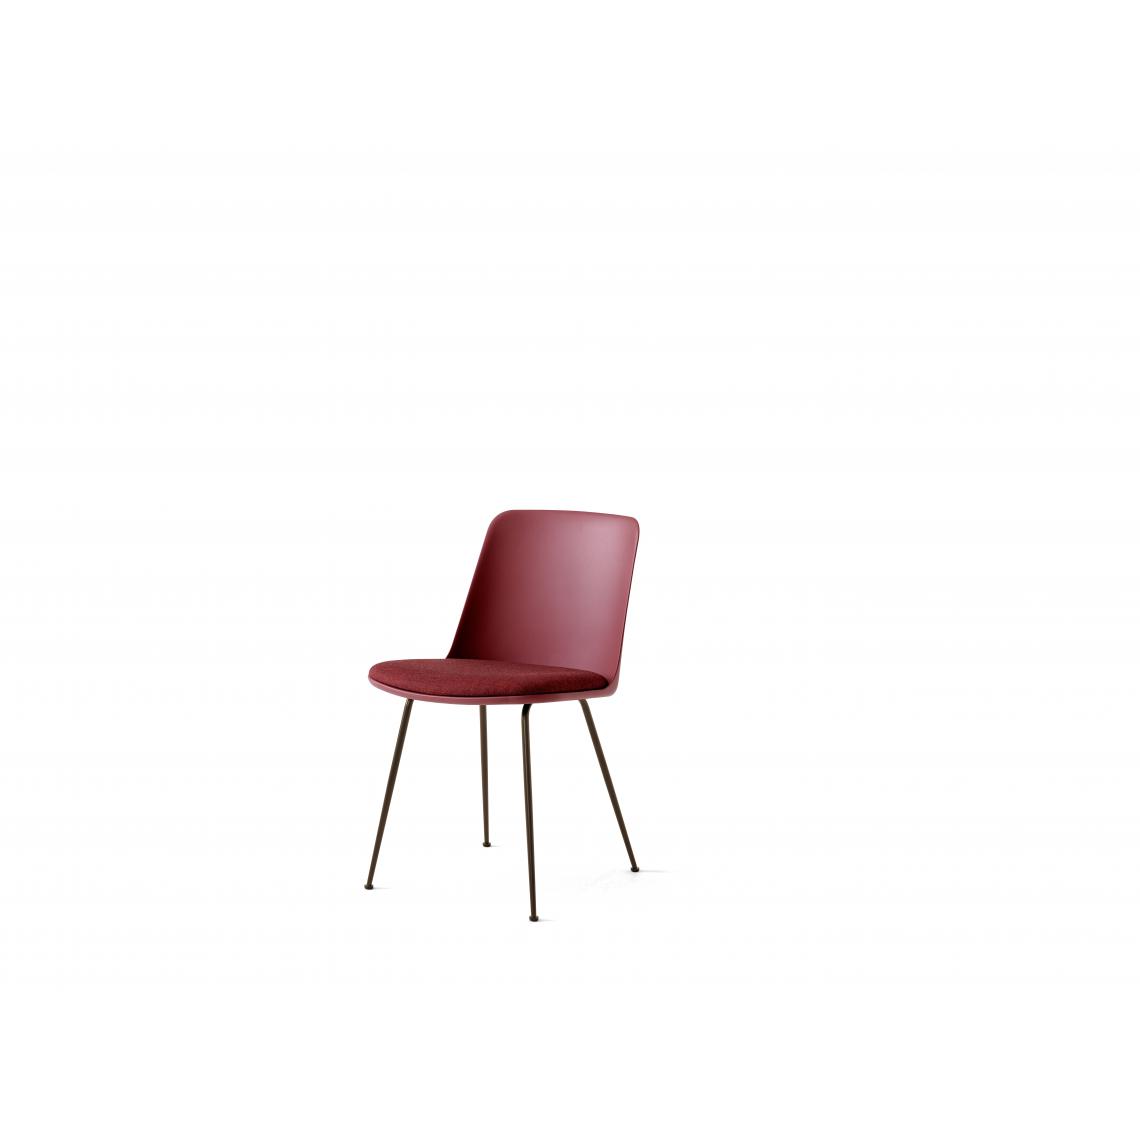 Andtradition - Chaise HW 6 - rouge/marron - bronzé - Chaises